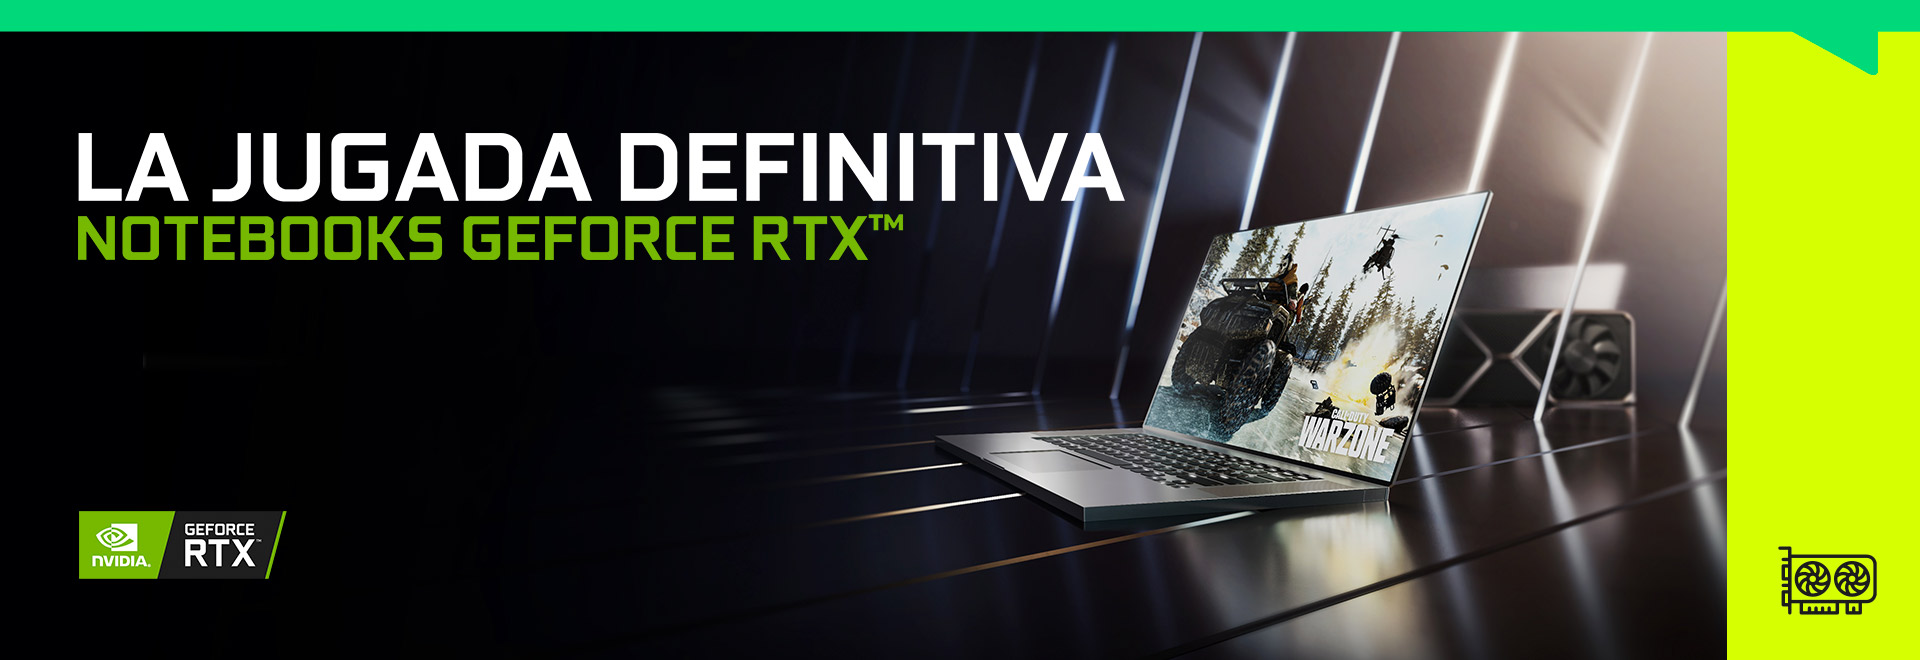 Nvidia Notebooks Geforce RTX Serie 30